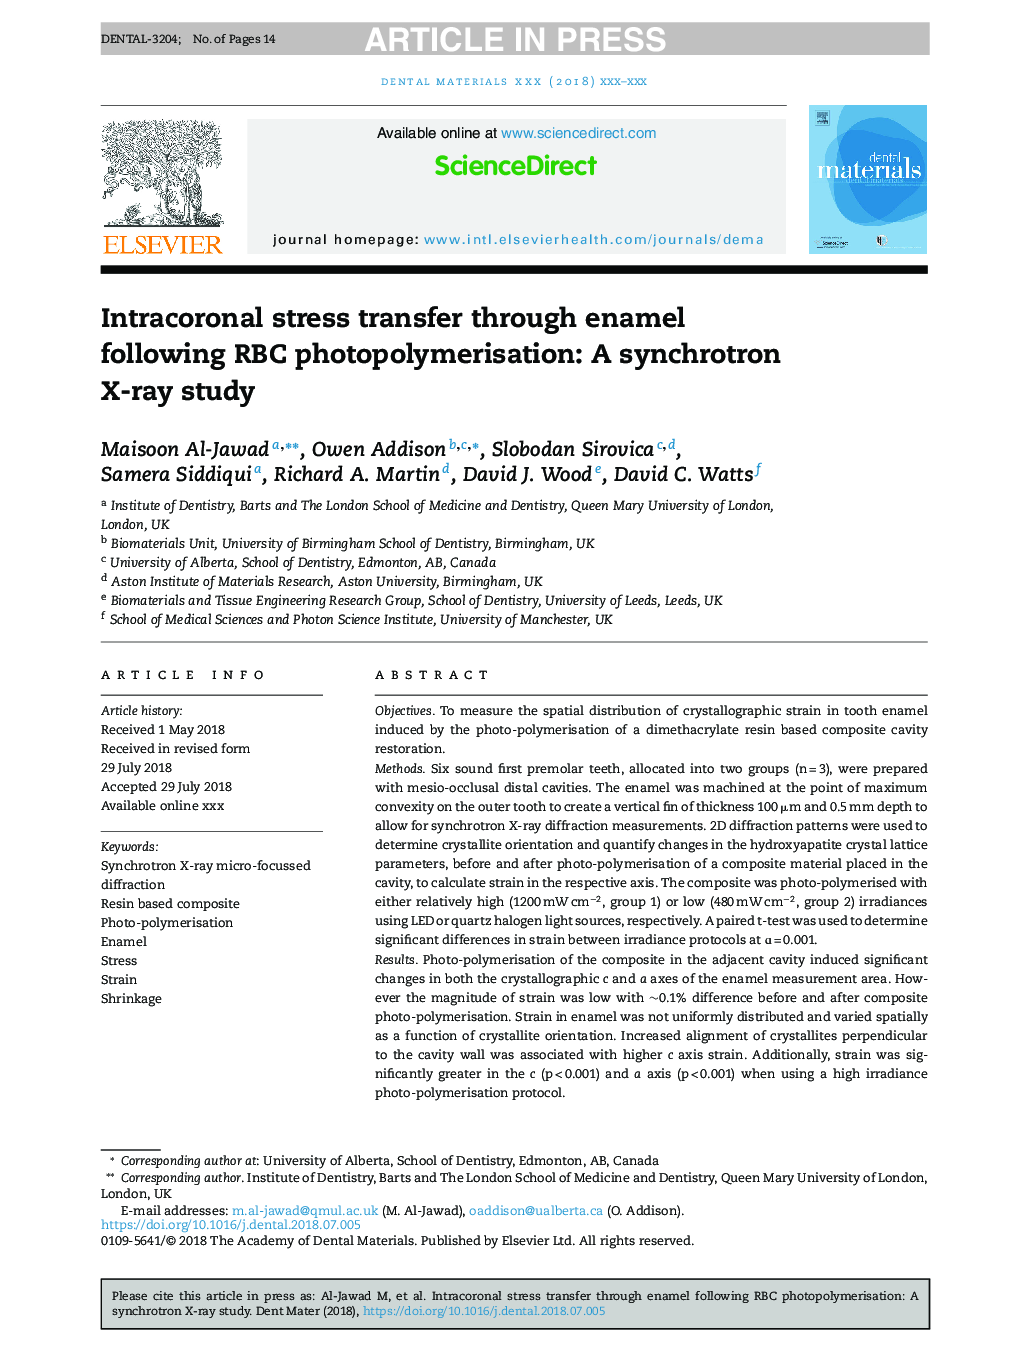 Intracoronal stress transfer through enamel following RBC photopolymerisation: A synchrotron X-ray study